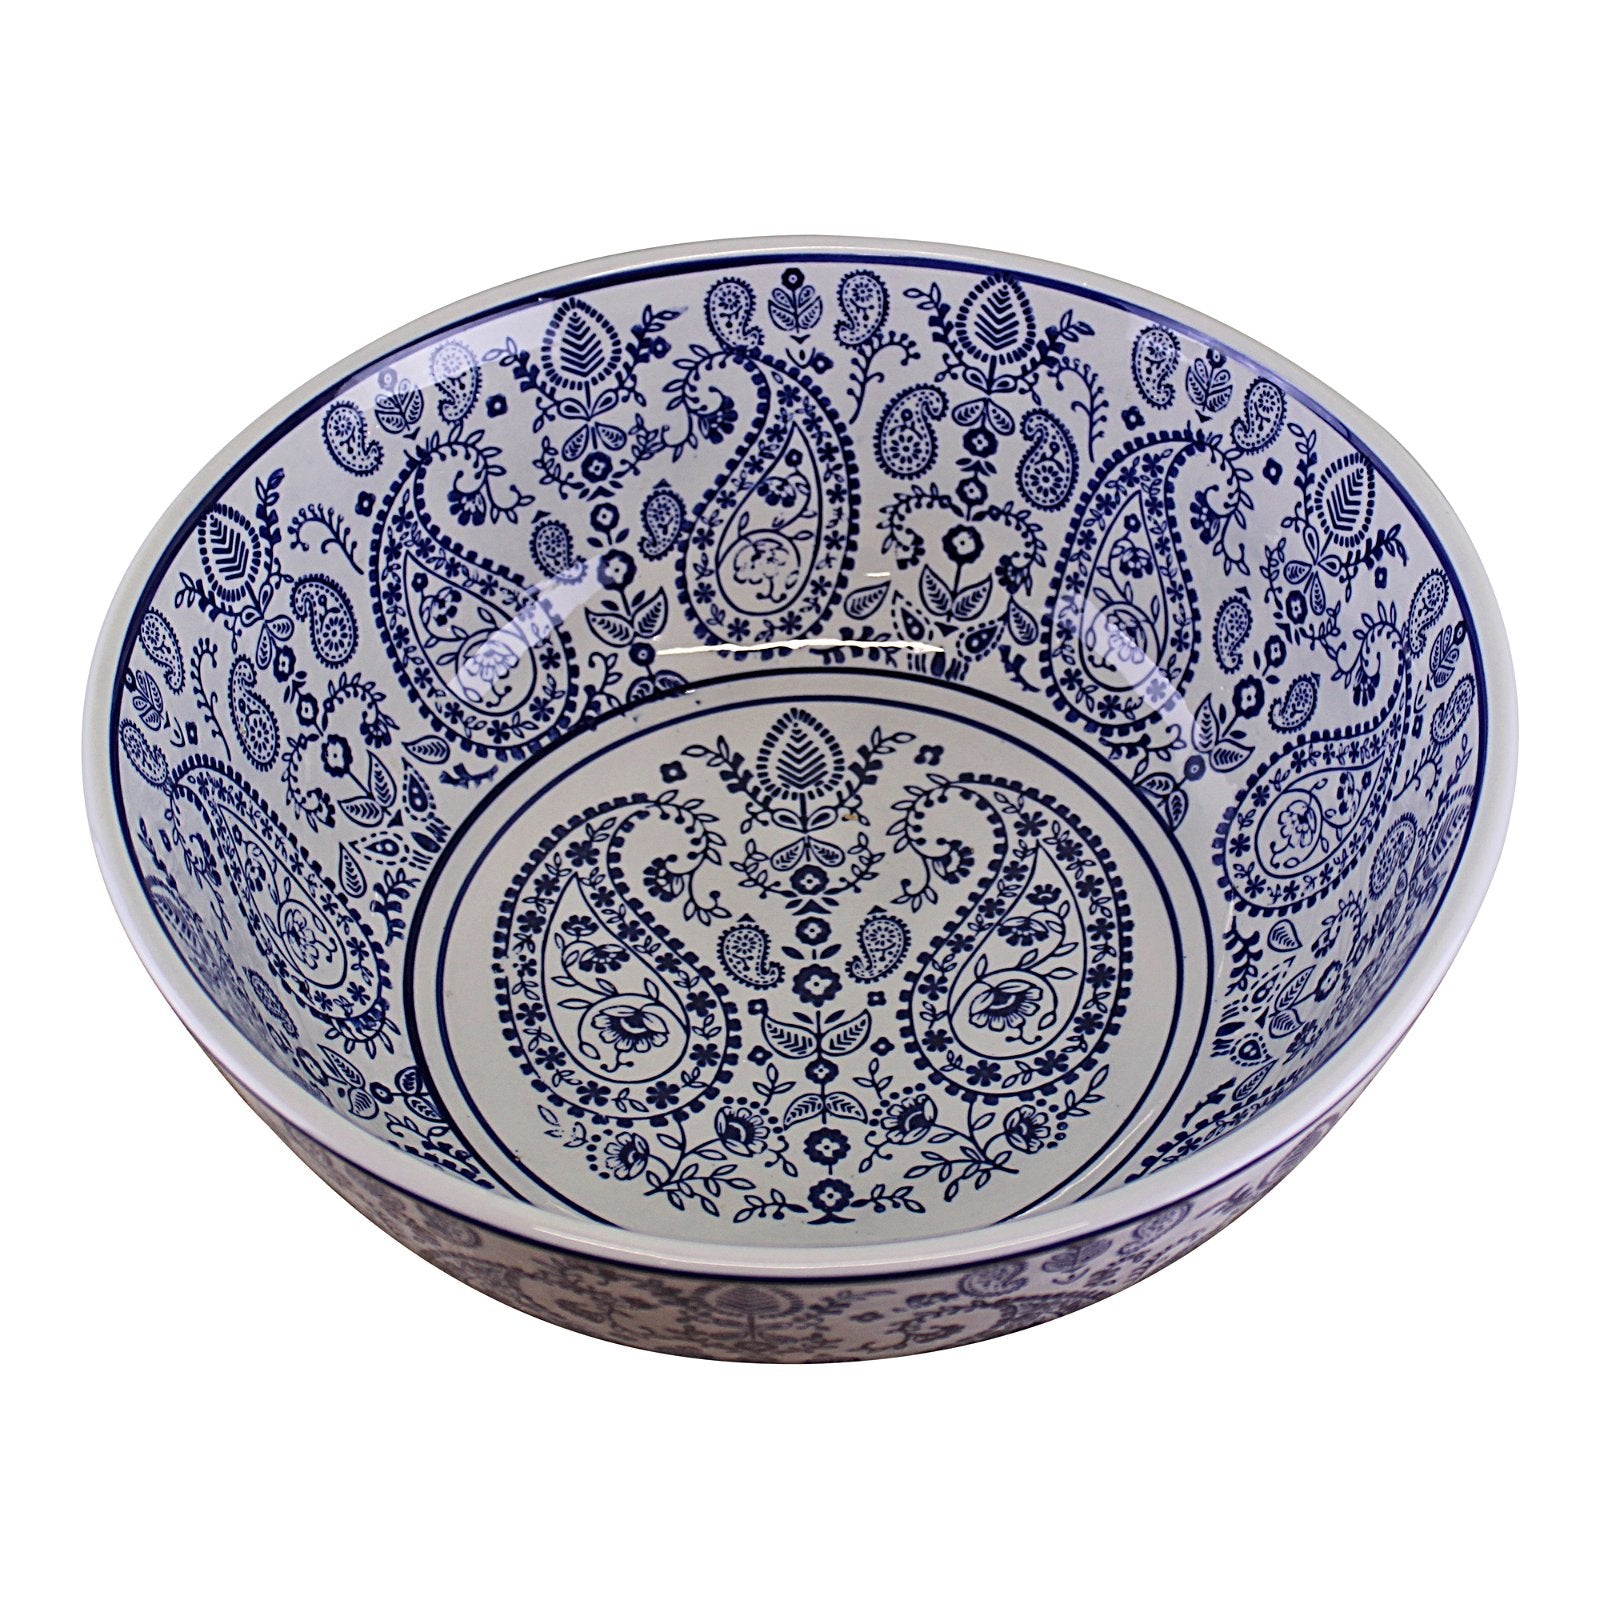 Large Ceramic Bowl, Vintage Blue & White Paisley Design